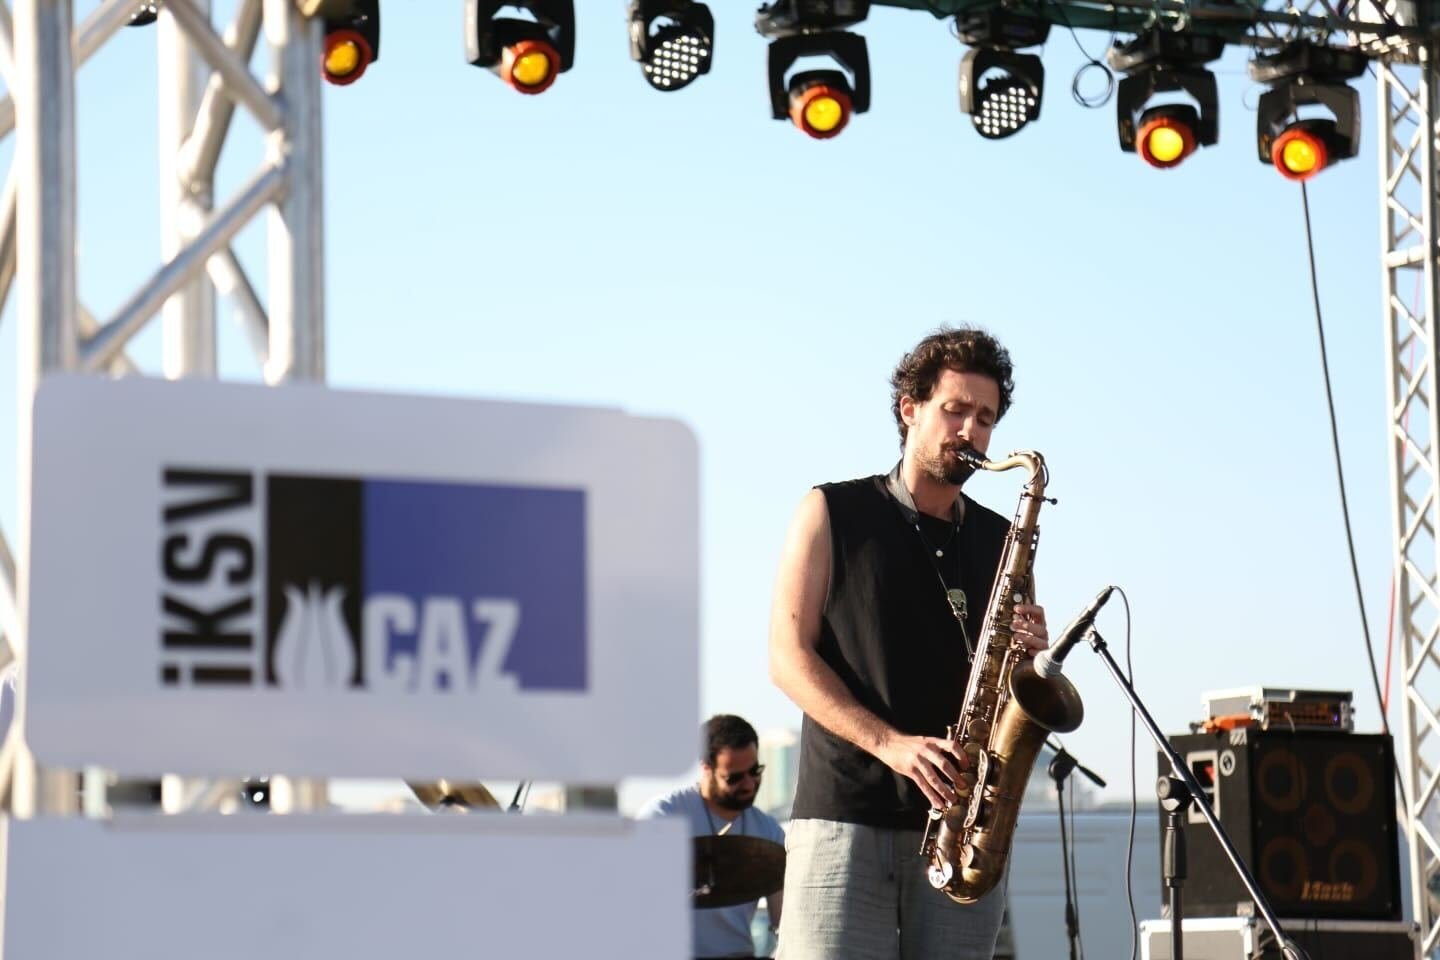 Istanbul West Side performing on stage, Istanbul, Turkey, June 6, 2022. (Photo courtesy of Küçükçekmece Municipality)